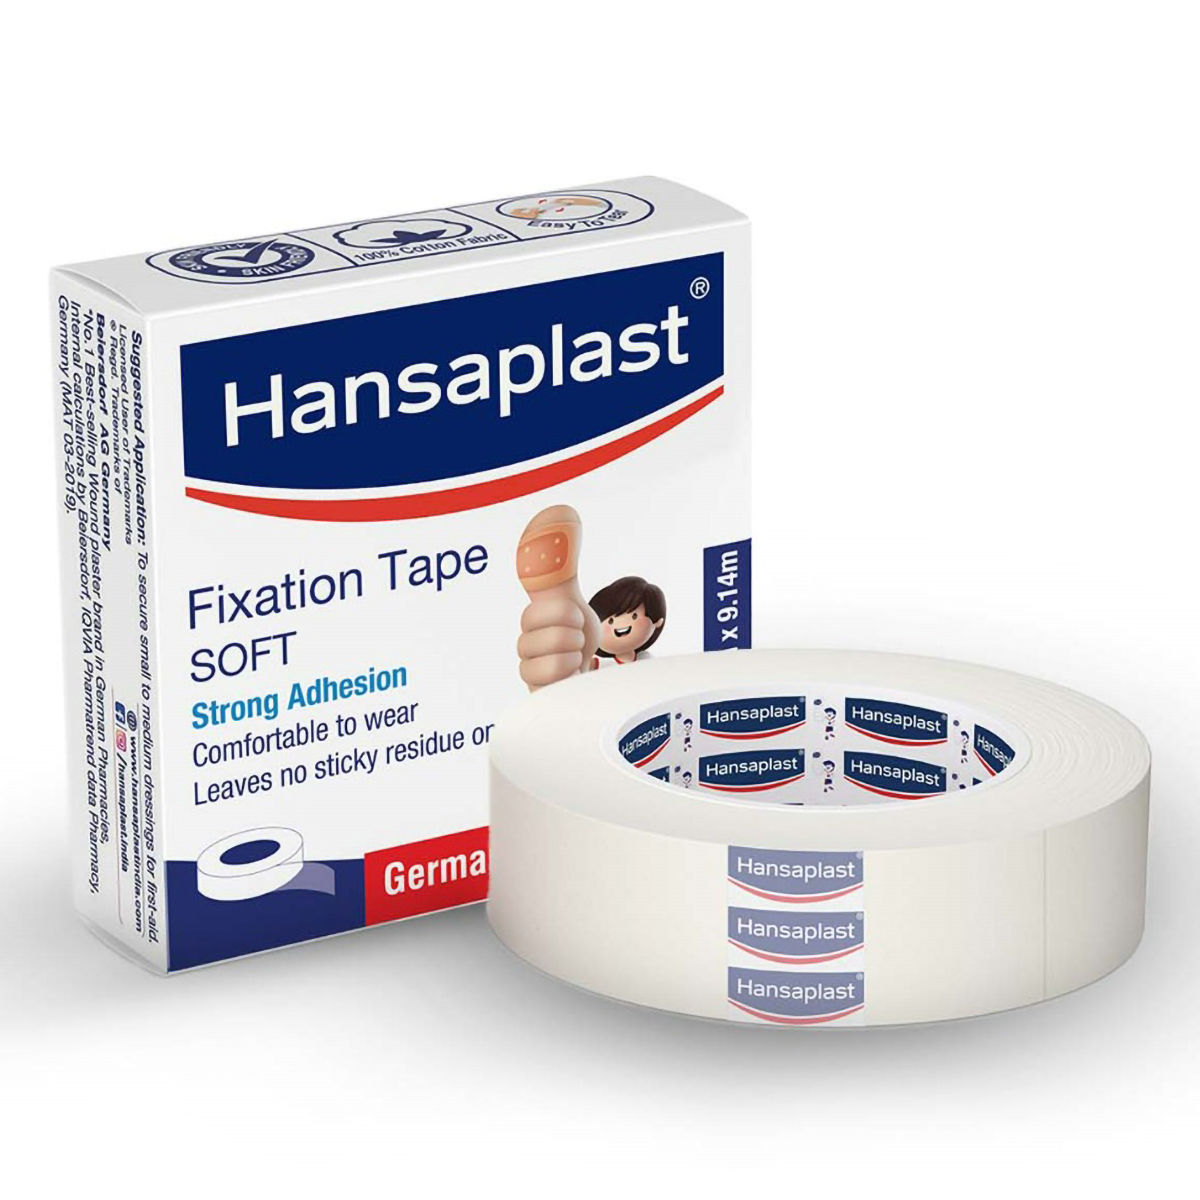 Buy Hansaplast Fixation Soft Tape 1.25 cm x 9.14 m, 1 Count Online